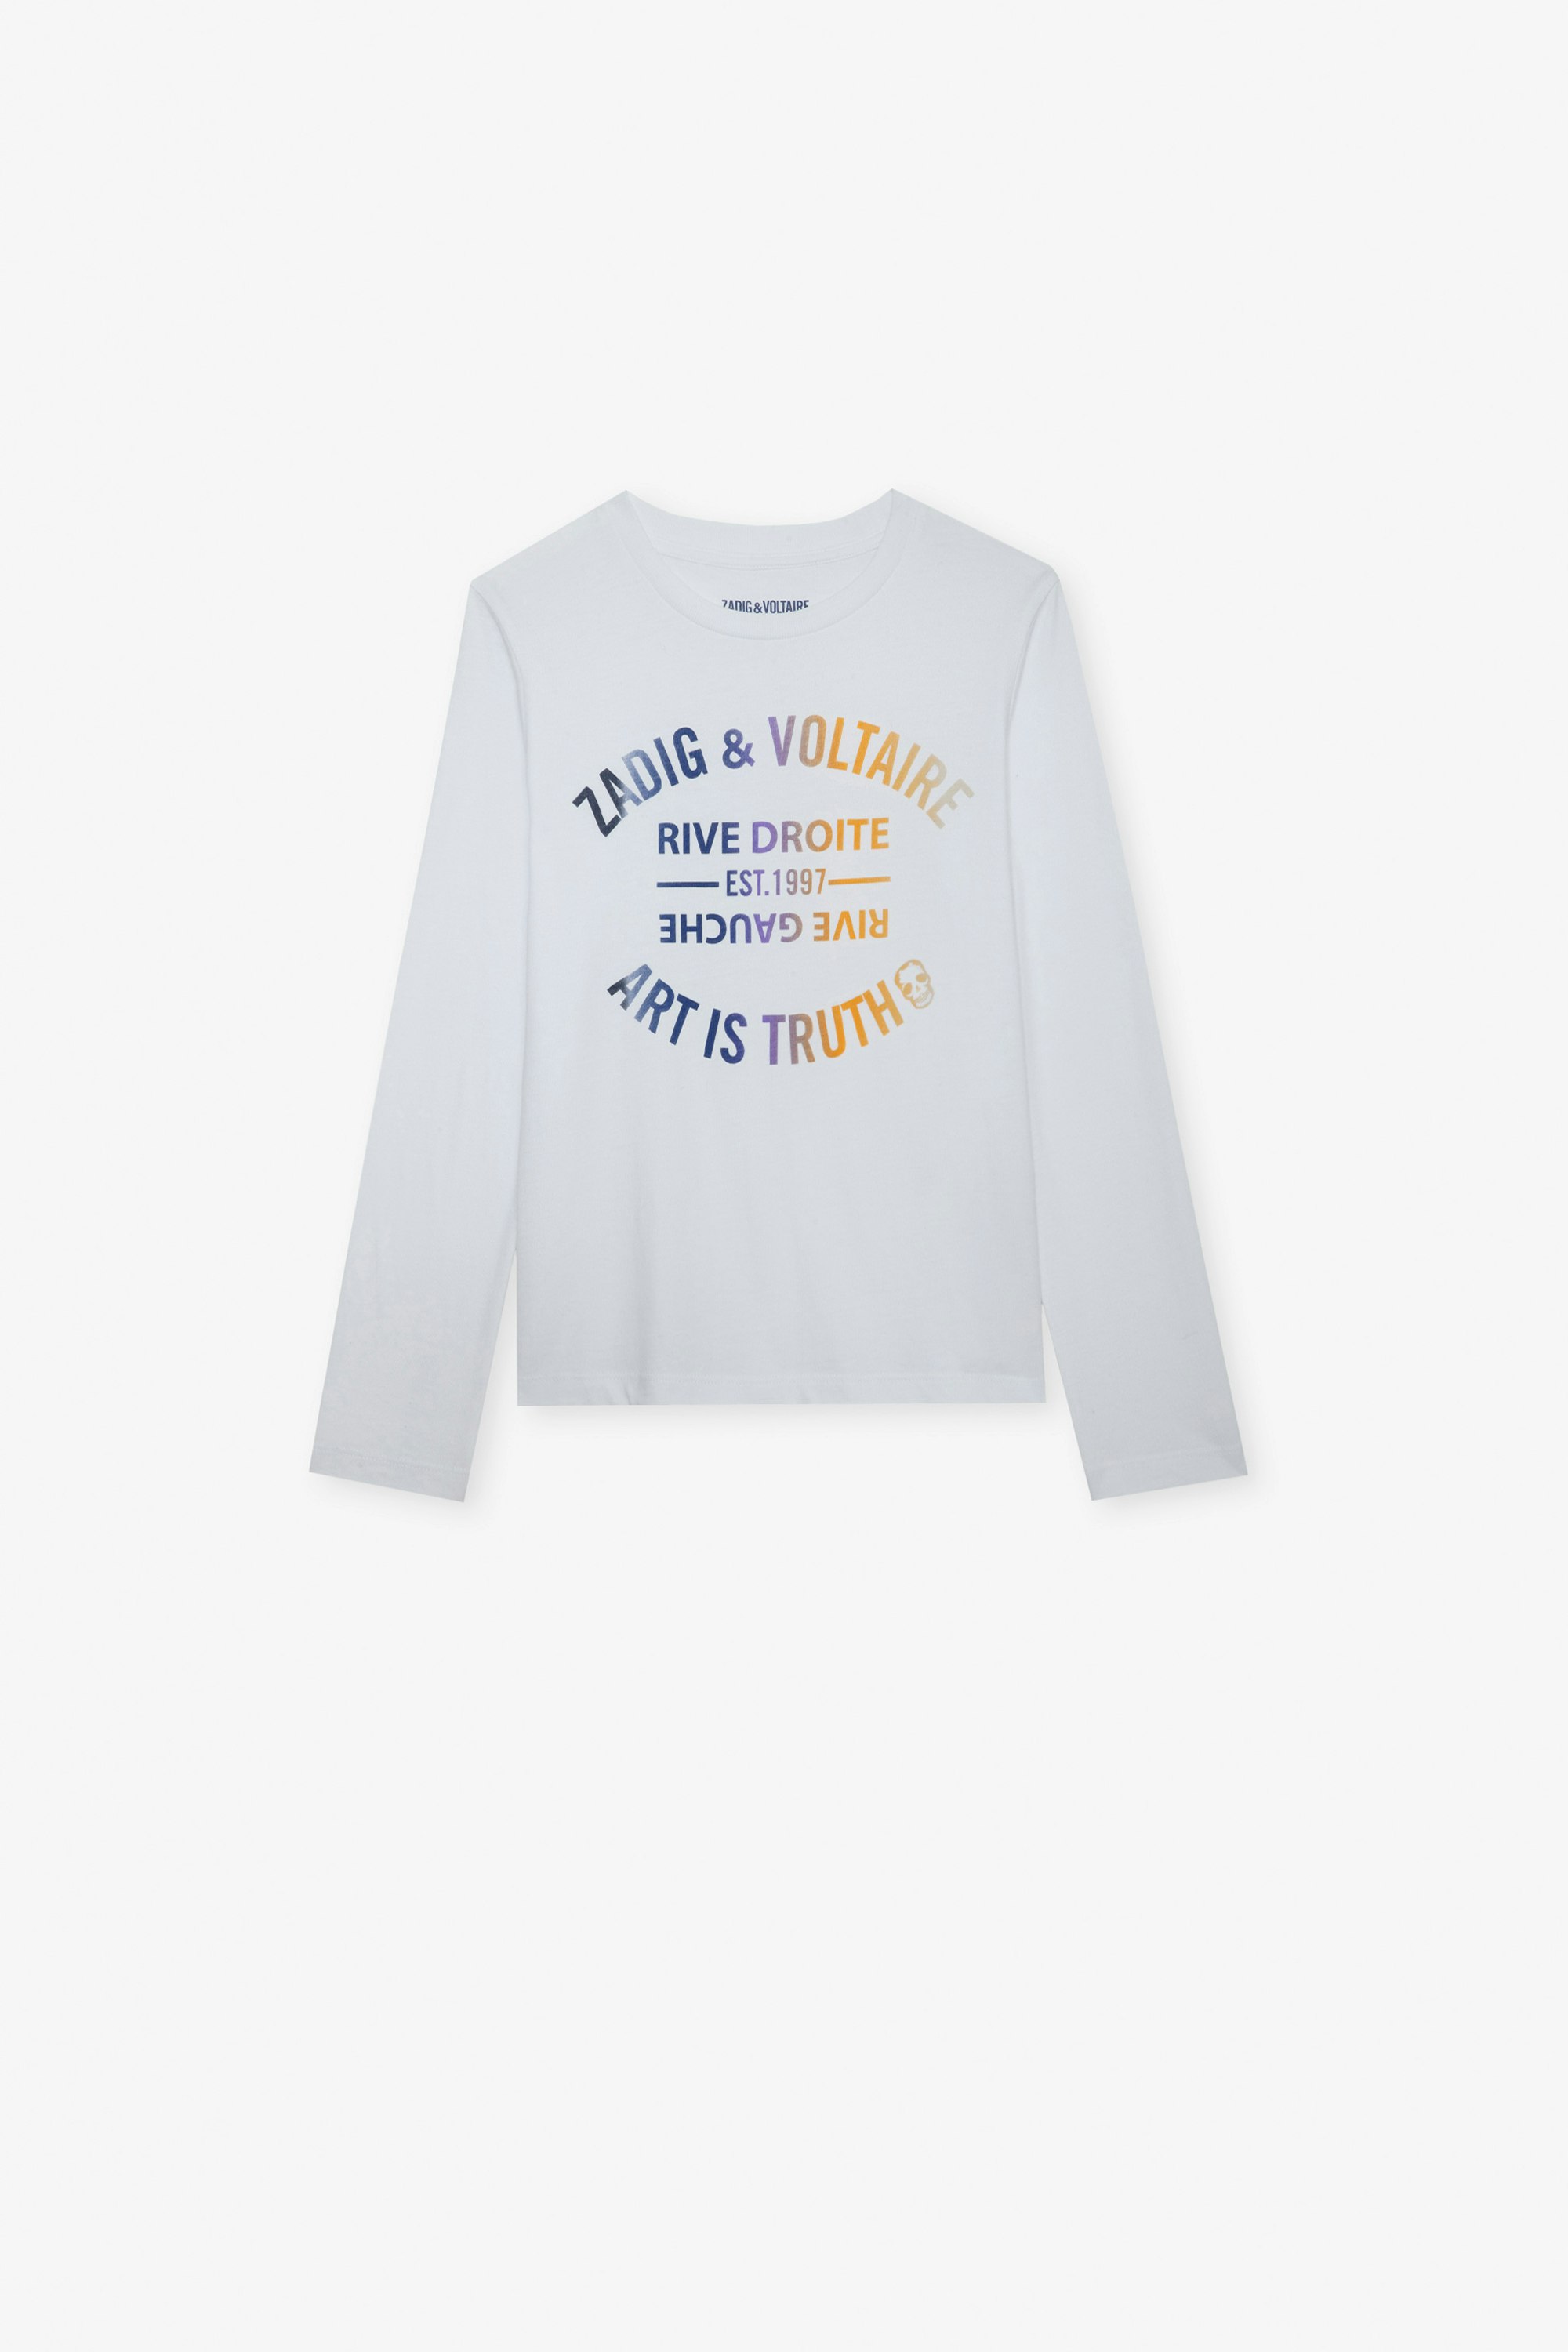 Kita Boys’ T-Shirt Boys’ white long-sleeved cotton T-shirt with insignia.